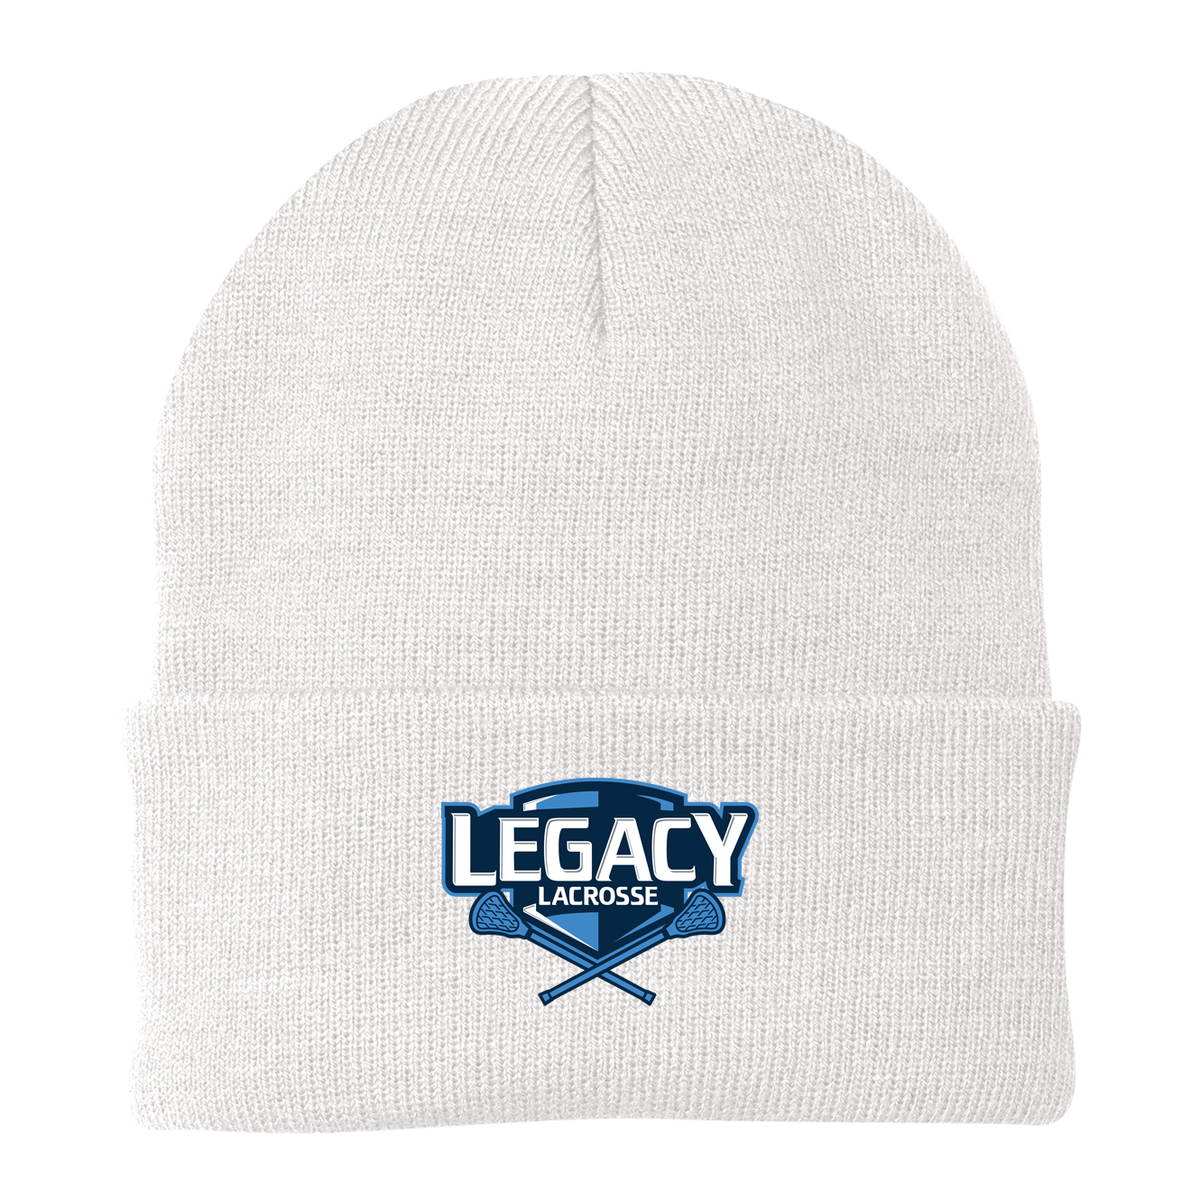 Legacy Boys Lacrosse Knit Beanie